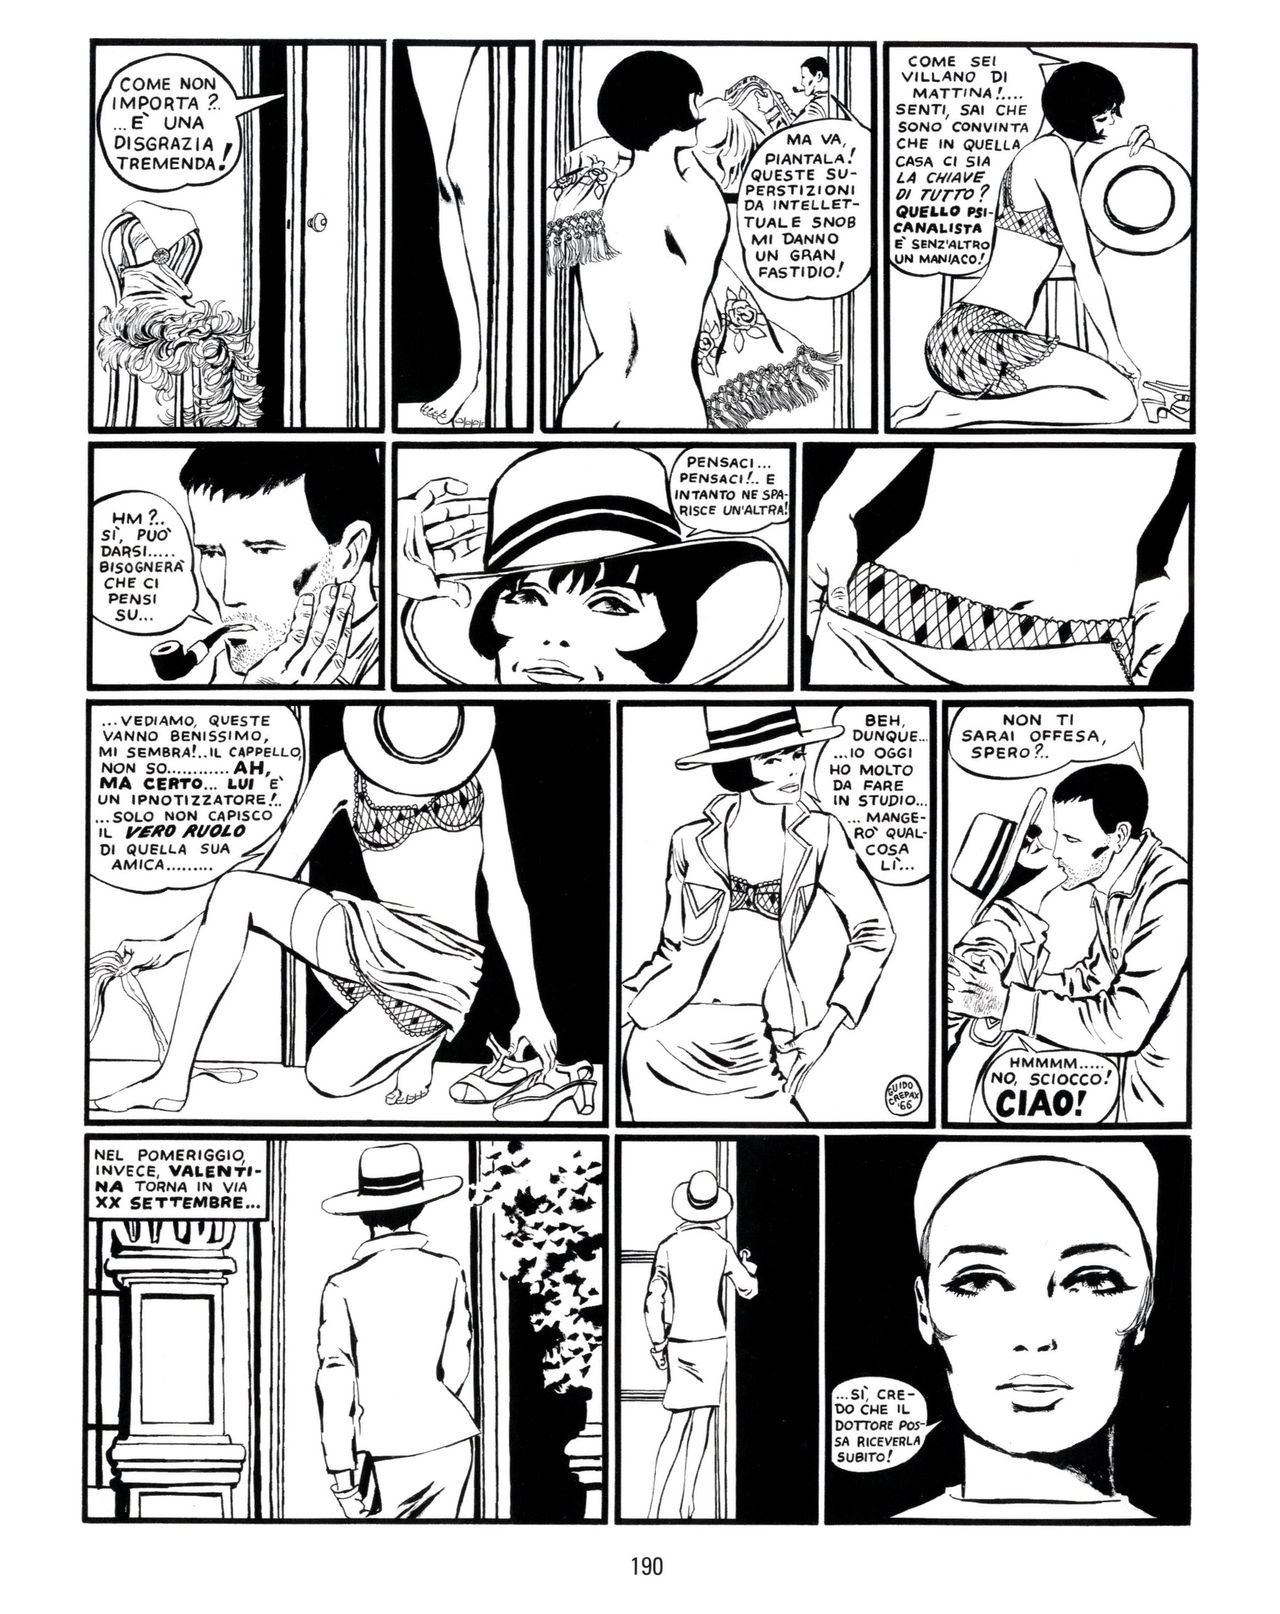 [Guido Crepax] Erotica Fumetti #25 : L'ascesa dei sotterranei : I cavalieri ciechi [Italian] 191